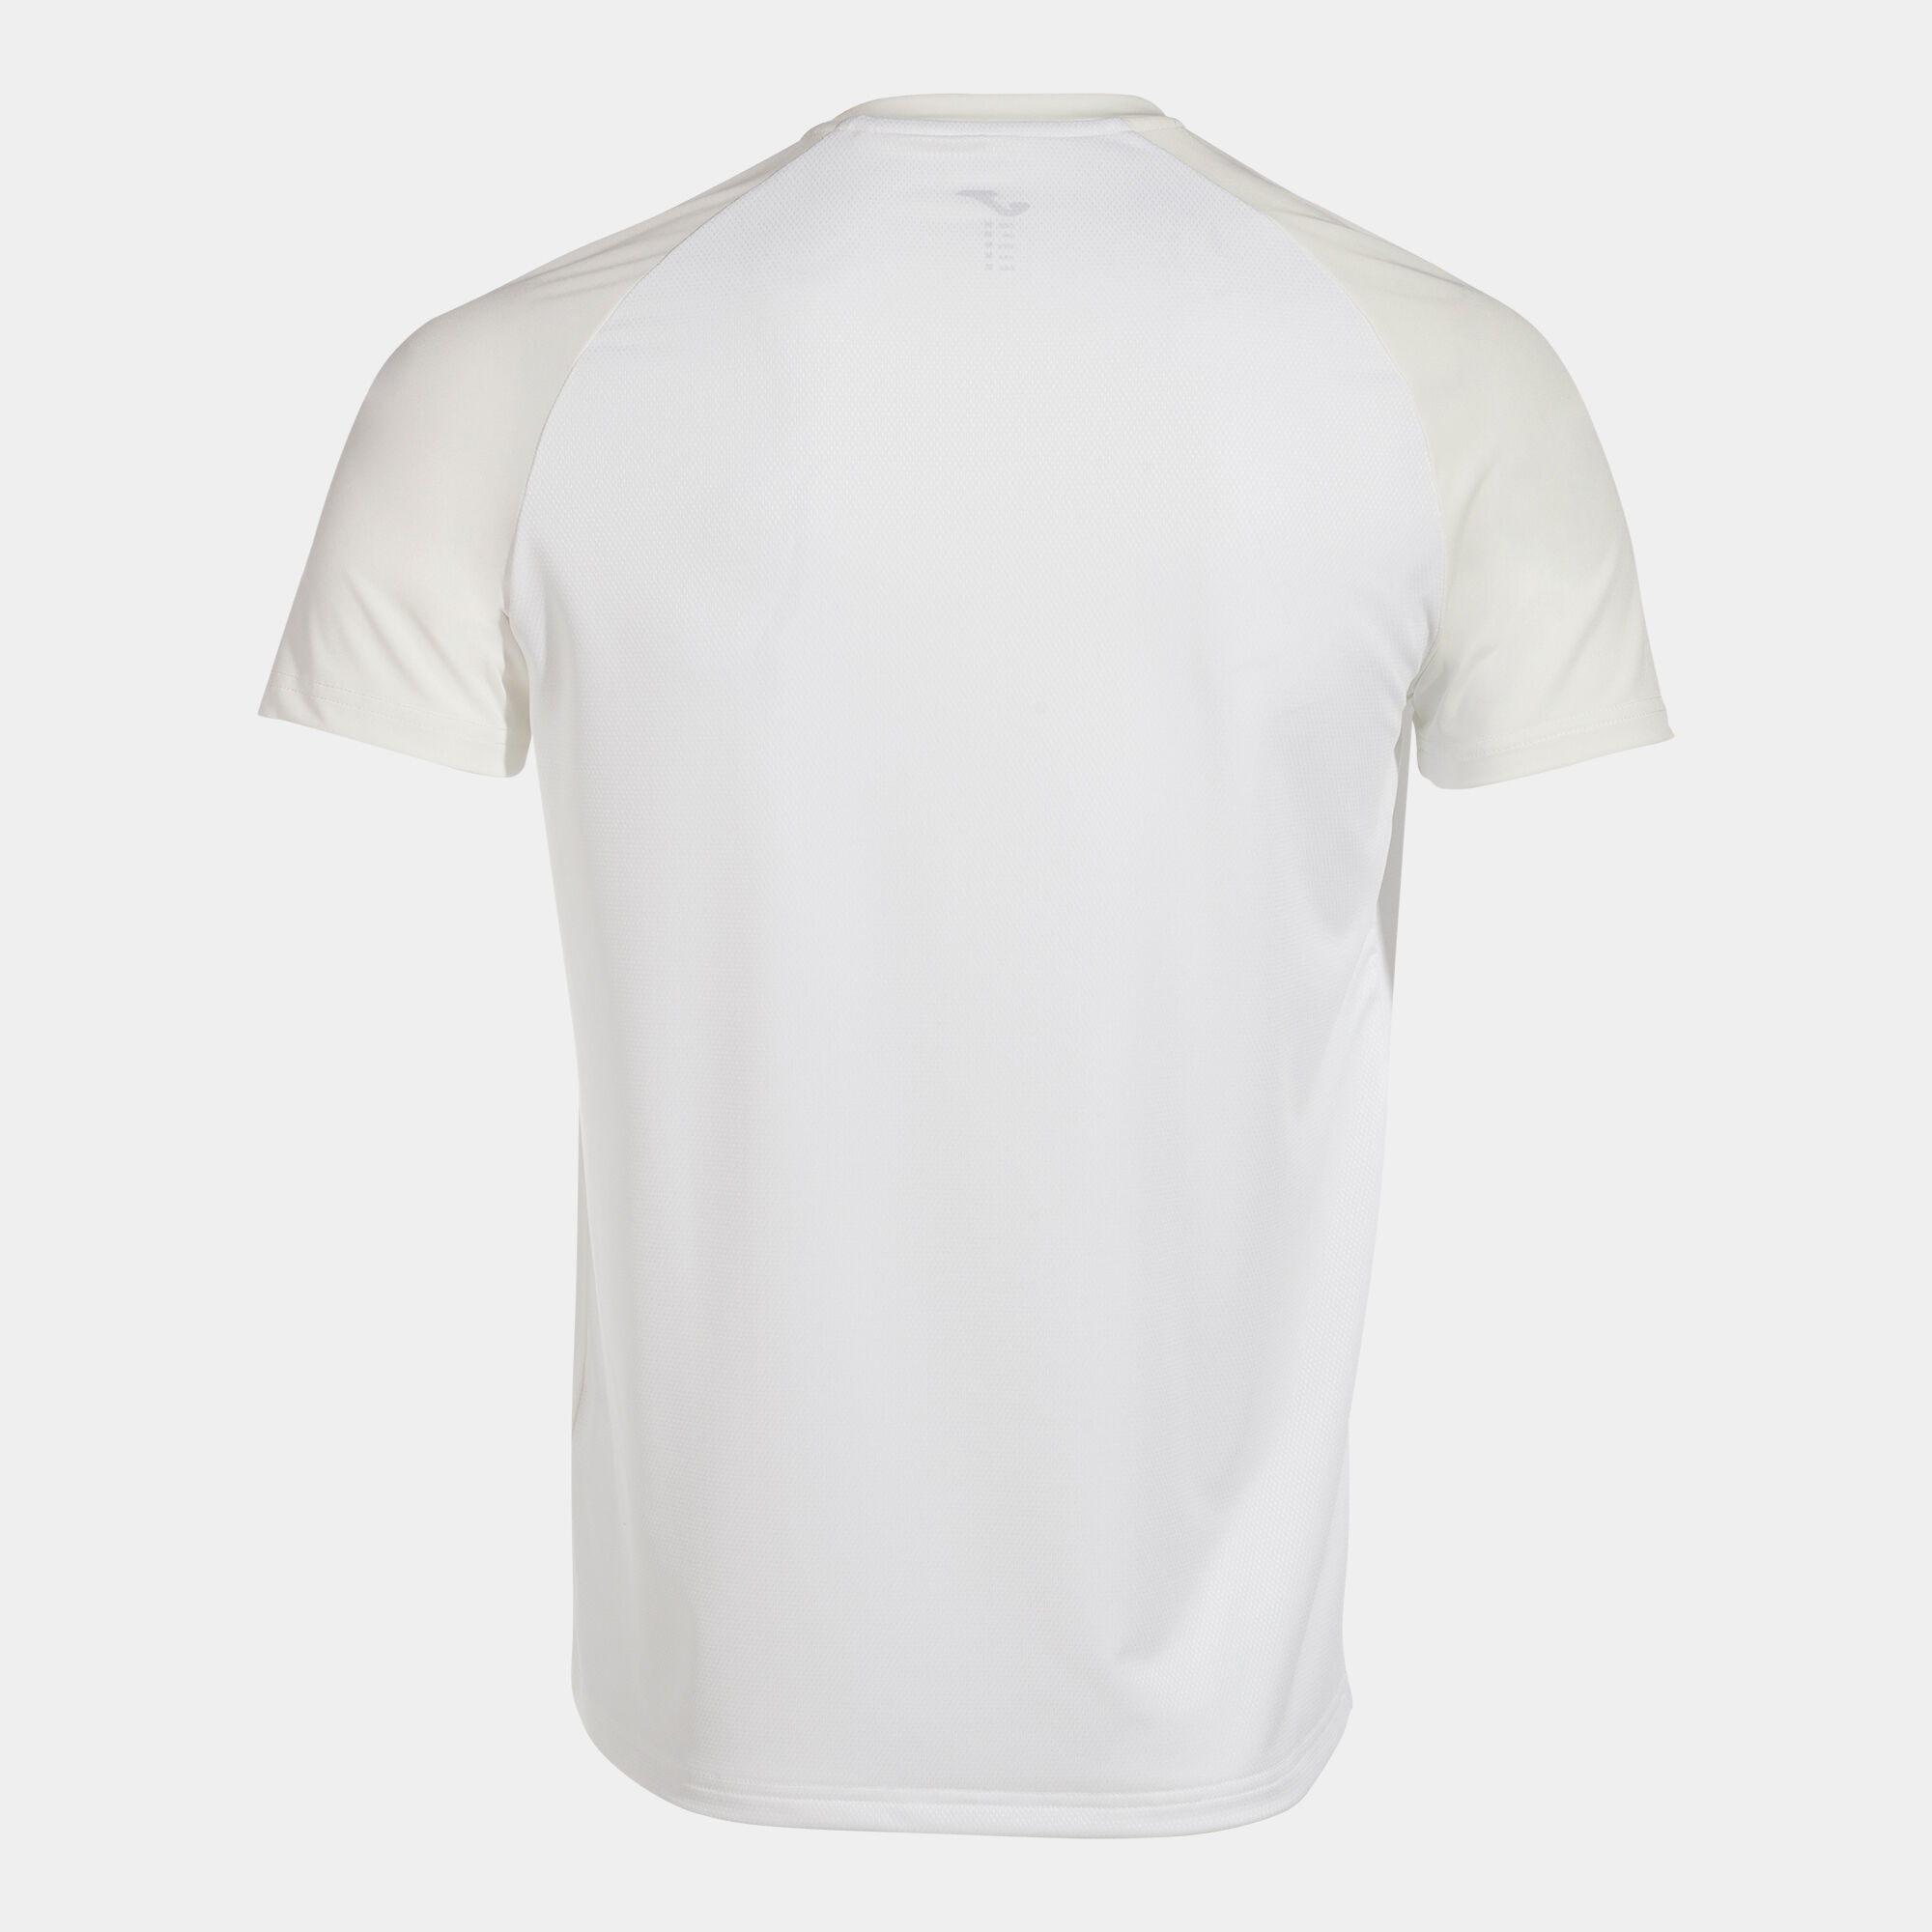 Camiseta manga corta hombre Elite X blanco